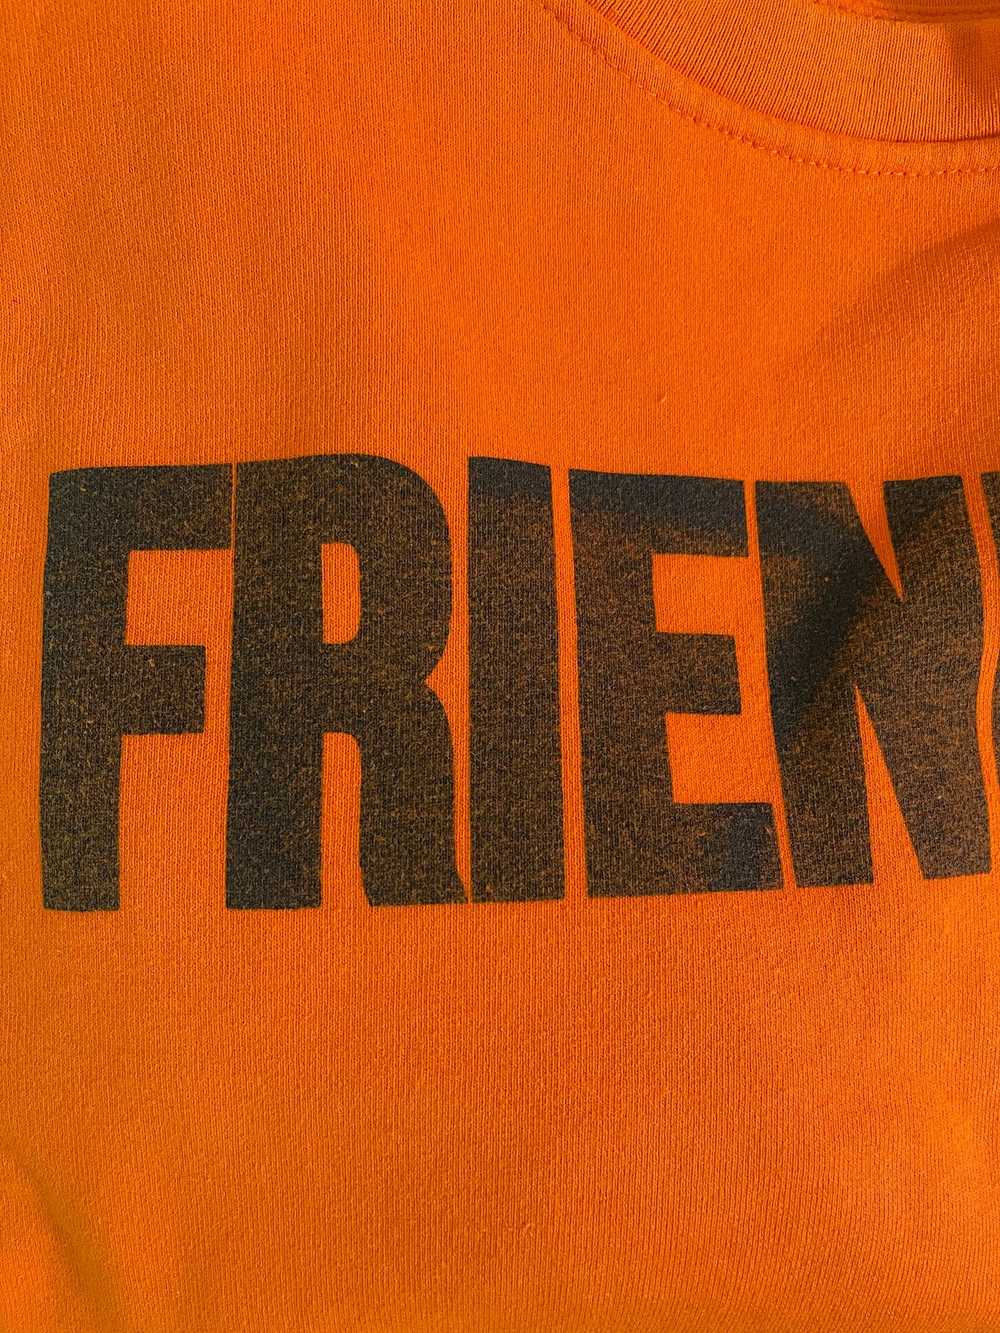 Vlone Vlone FRIENDS Orange Crew - image 2